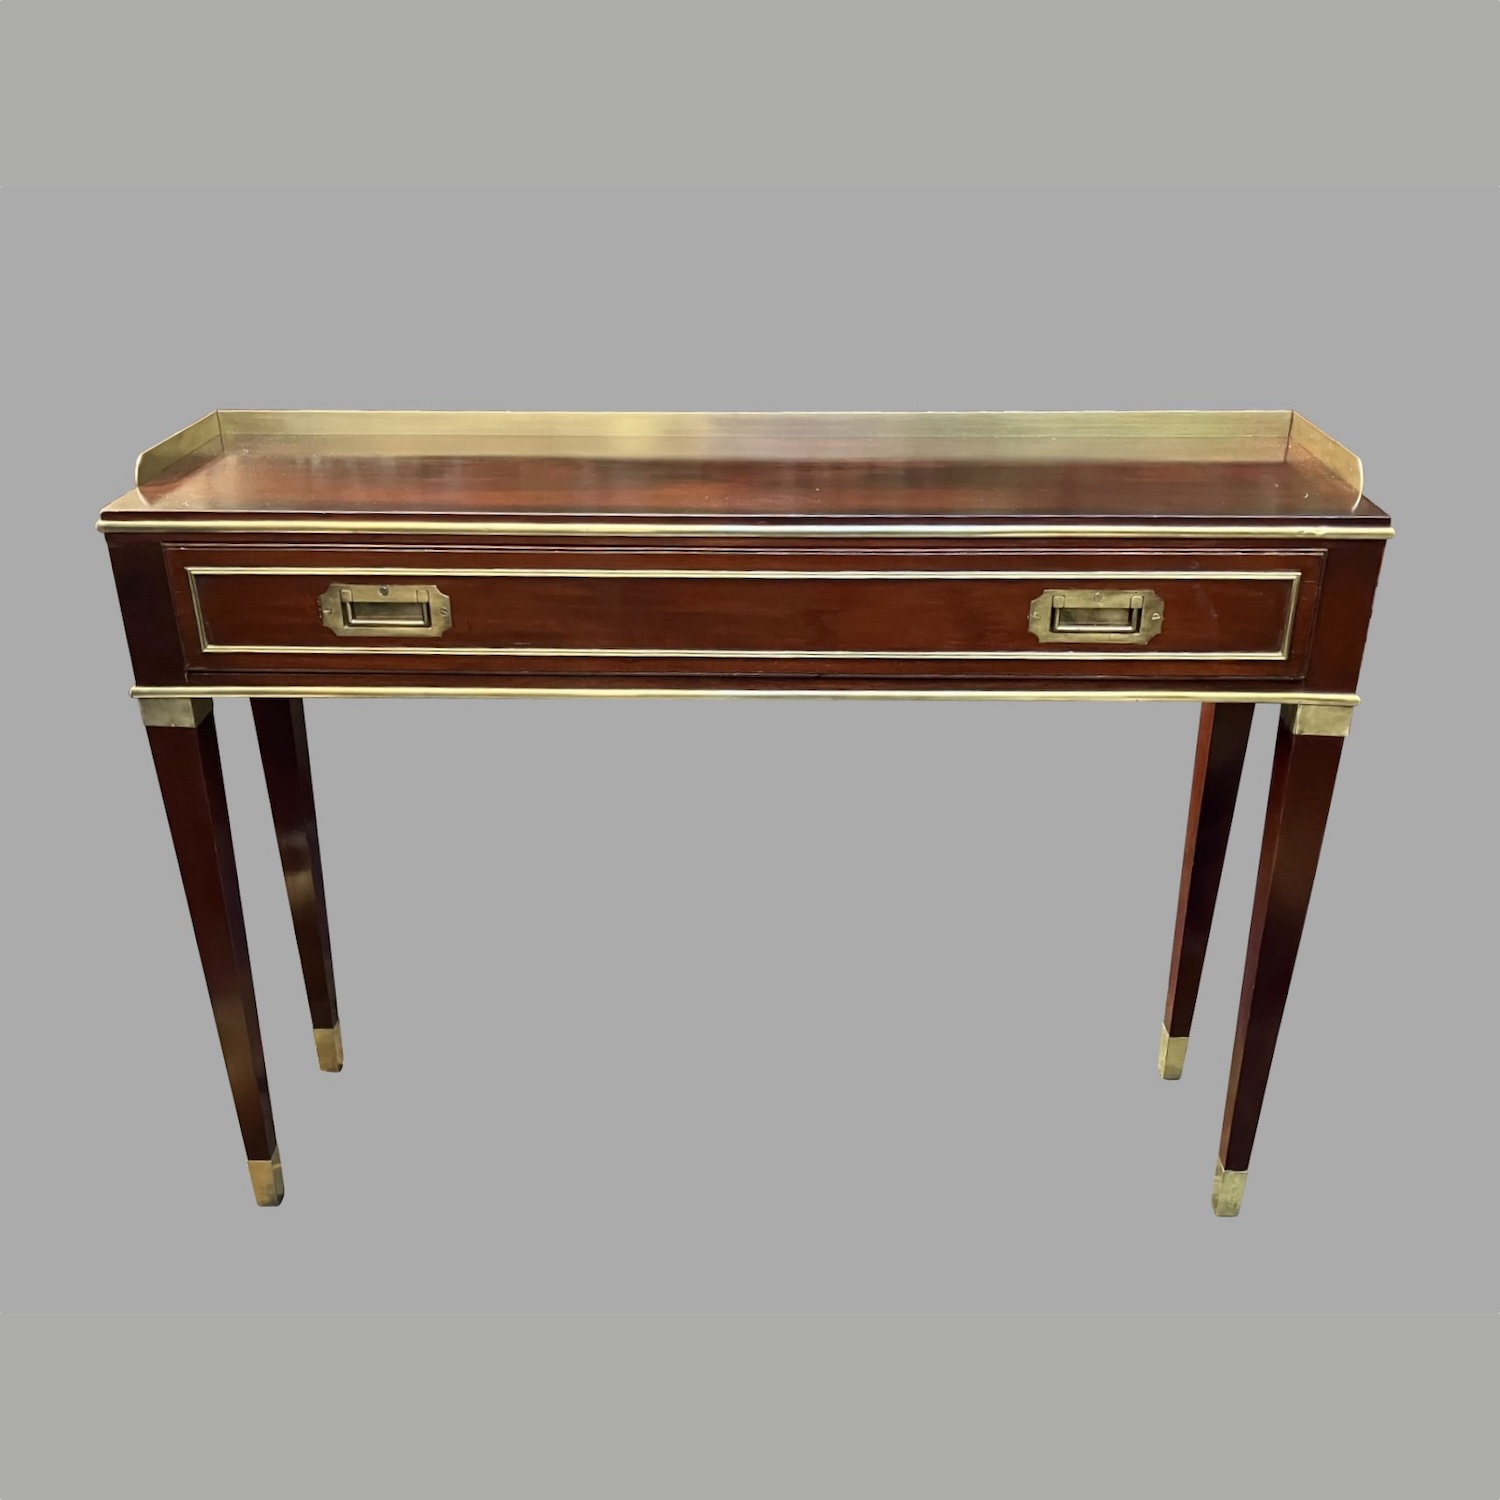 english-campaign-style-mahogany-console-table-narrow-proportions-circa-1930-c323-4